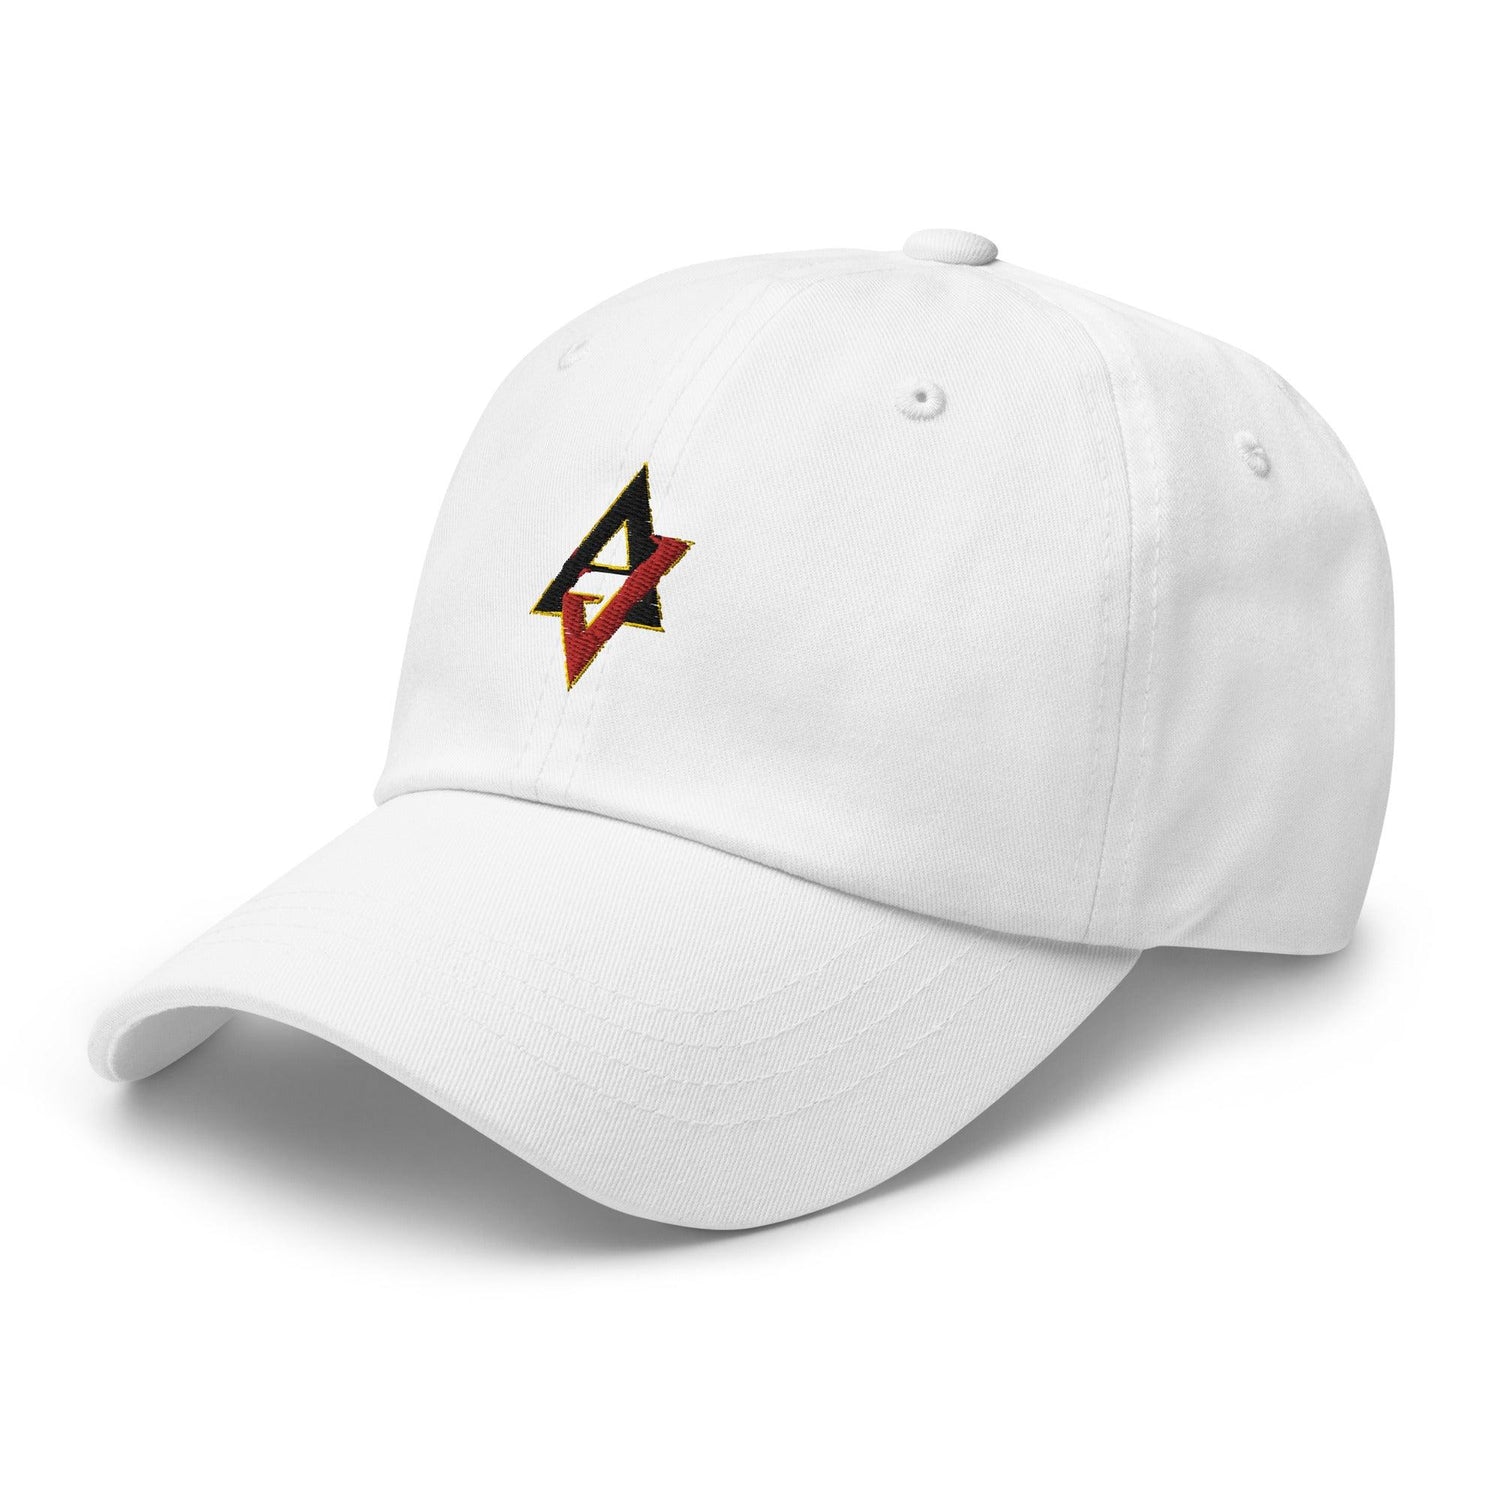 AJ Vukovich “Signature” hat - Fan Arch